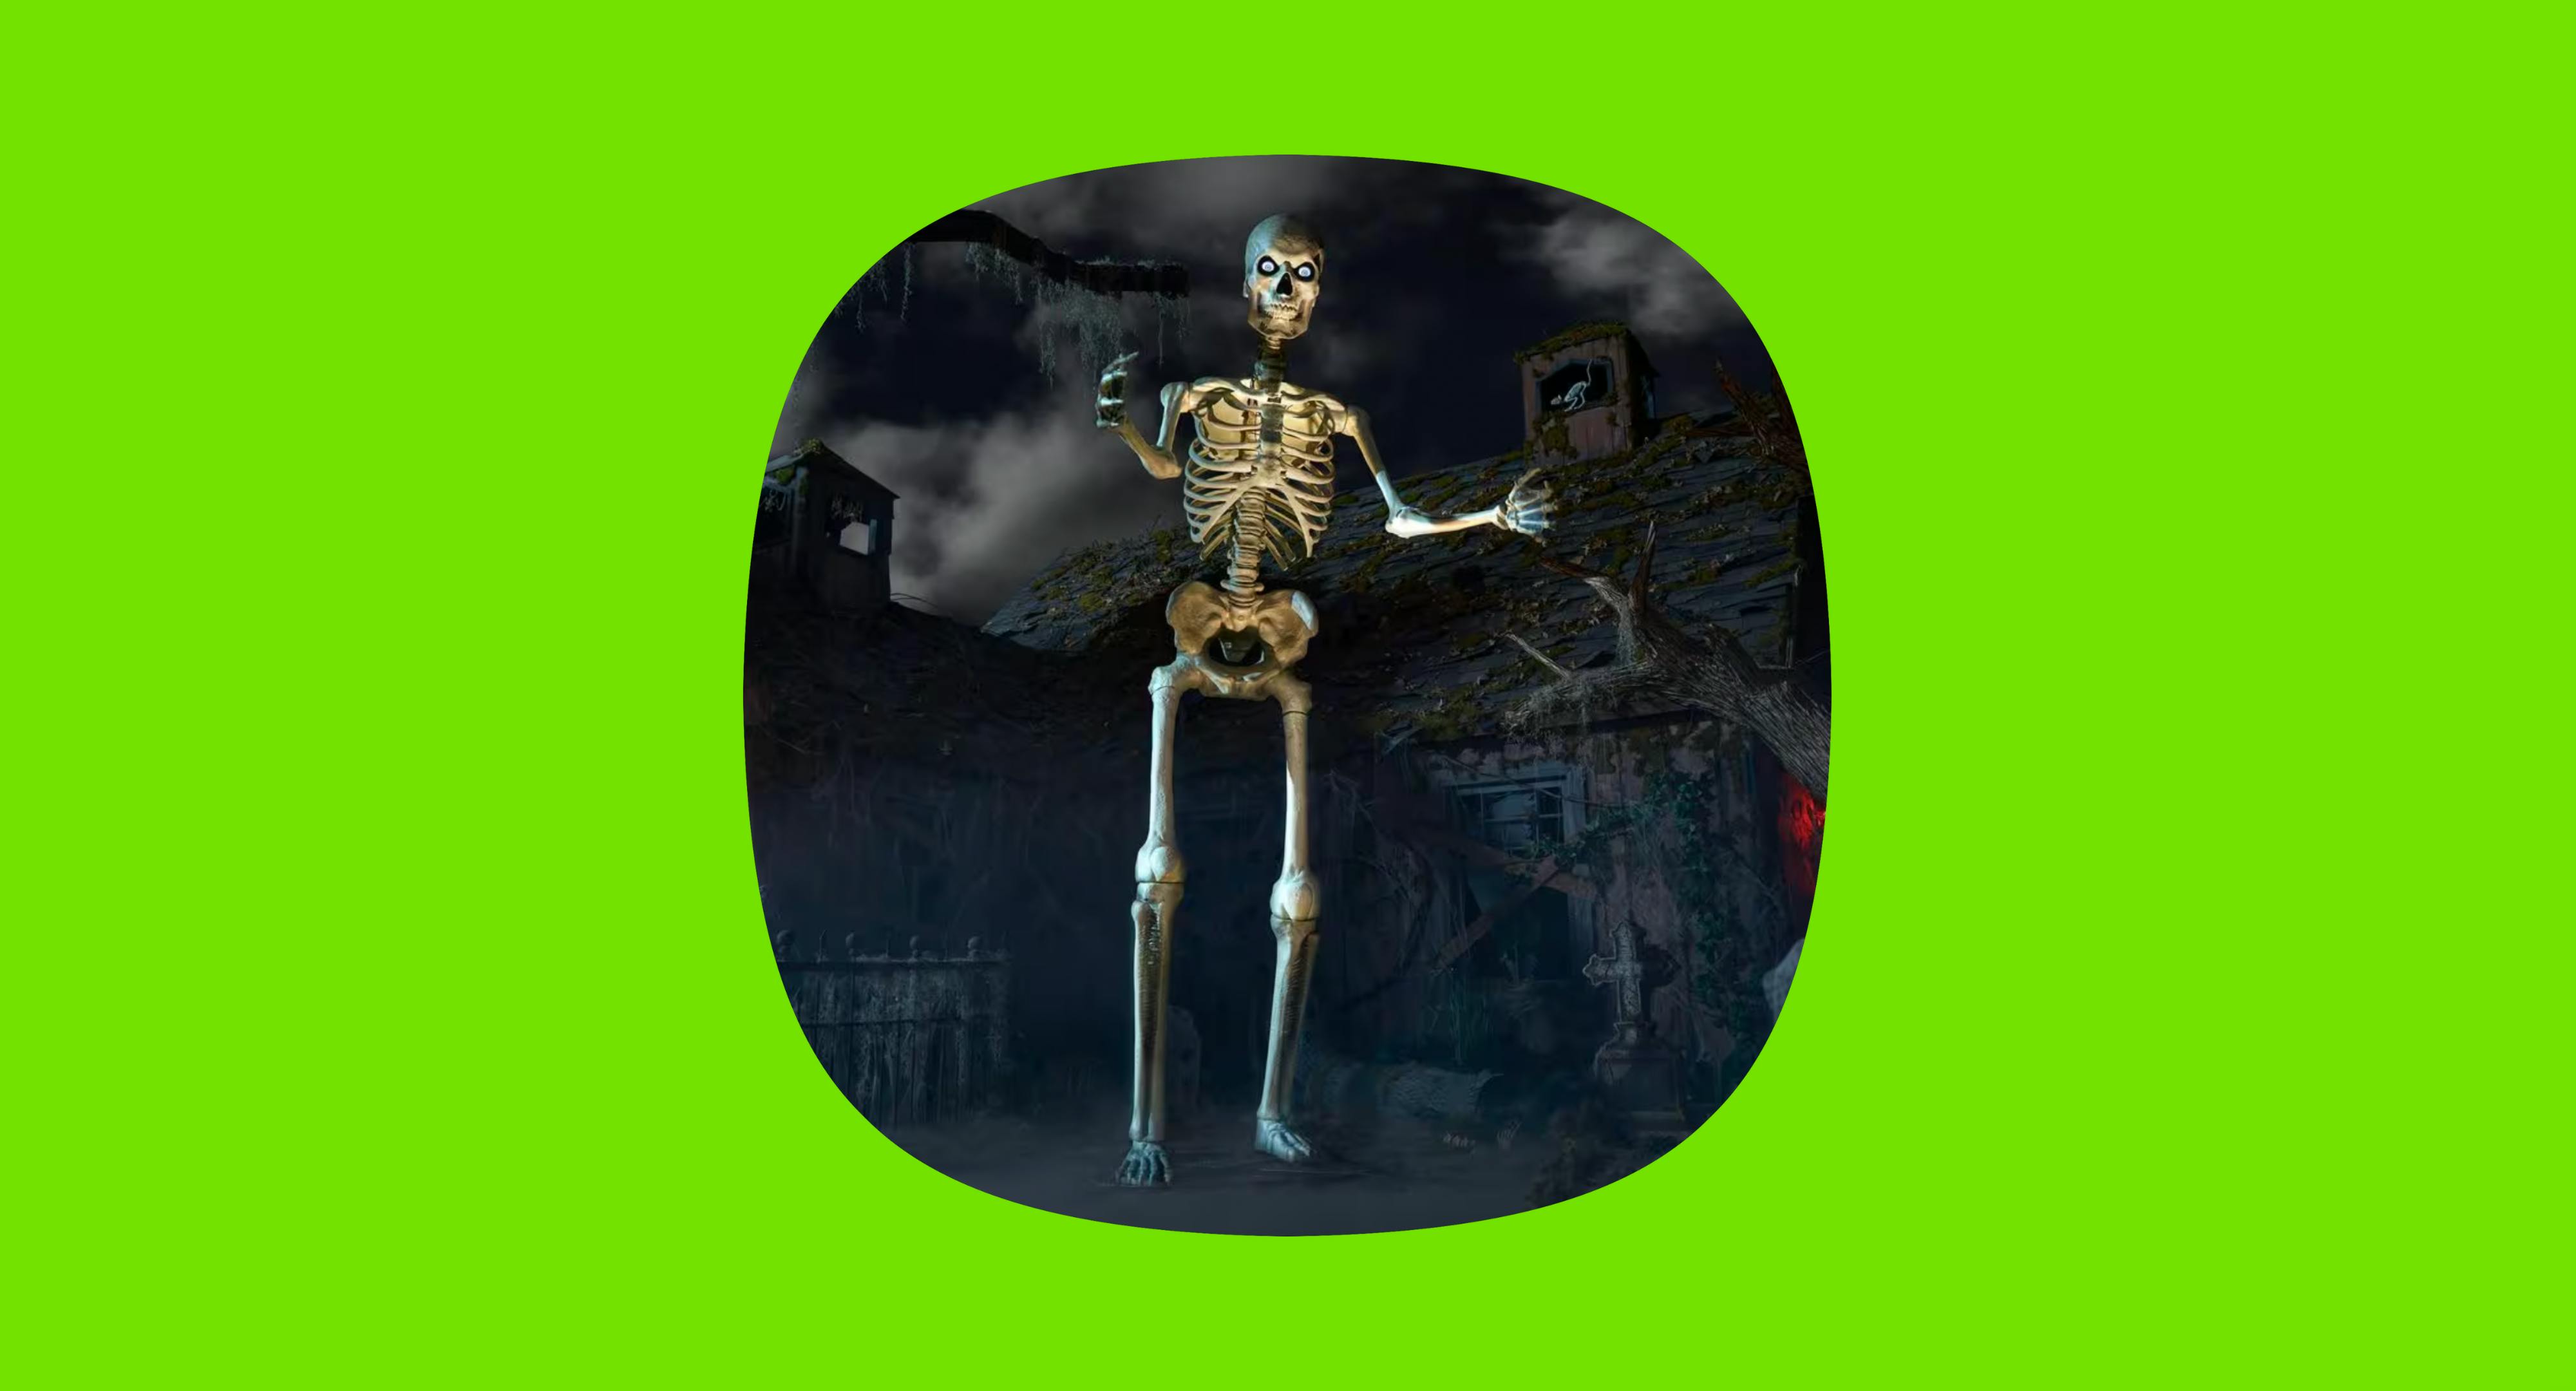 6 Ft Tall Crazy Bonez Pose-N-Stay Skeleton